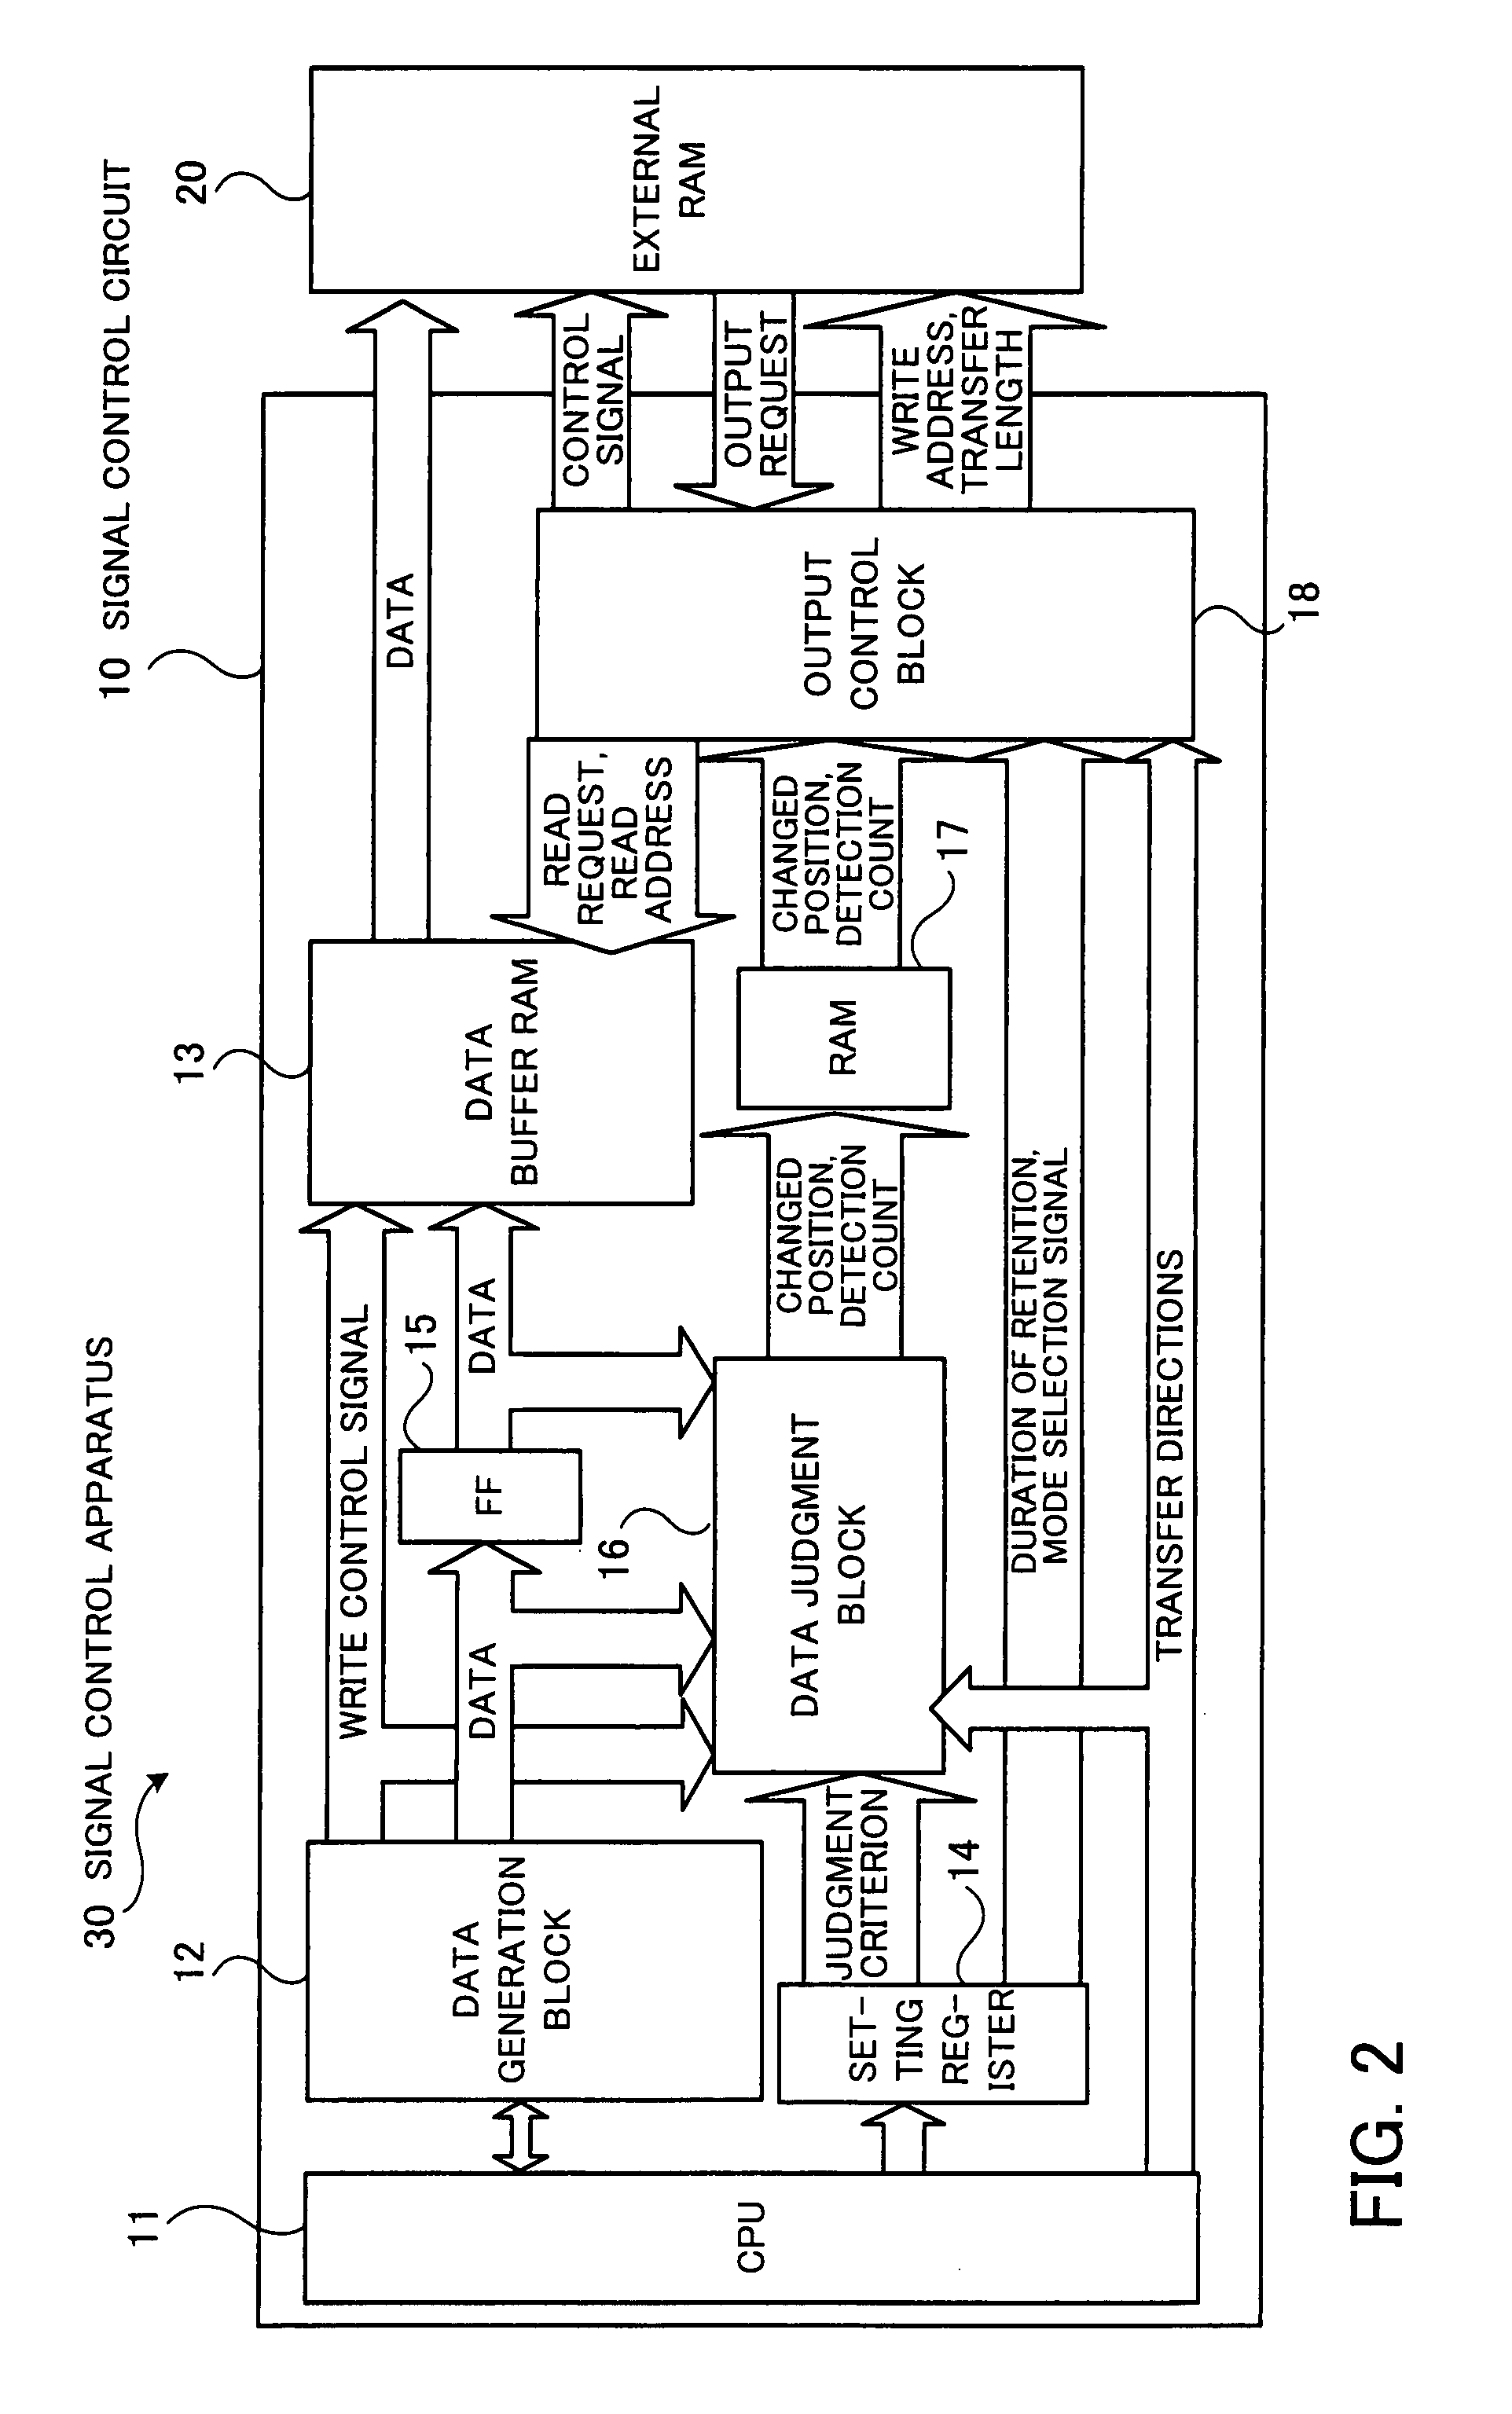 Signal control circuit and signal control apparatus